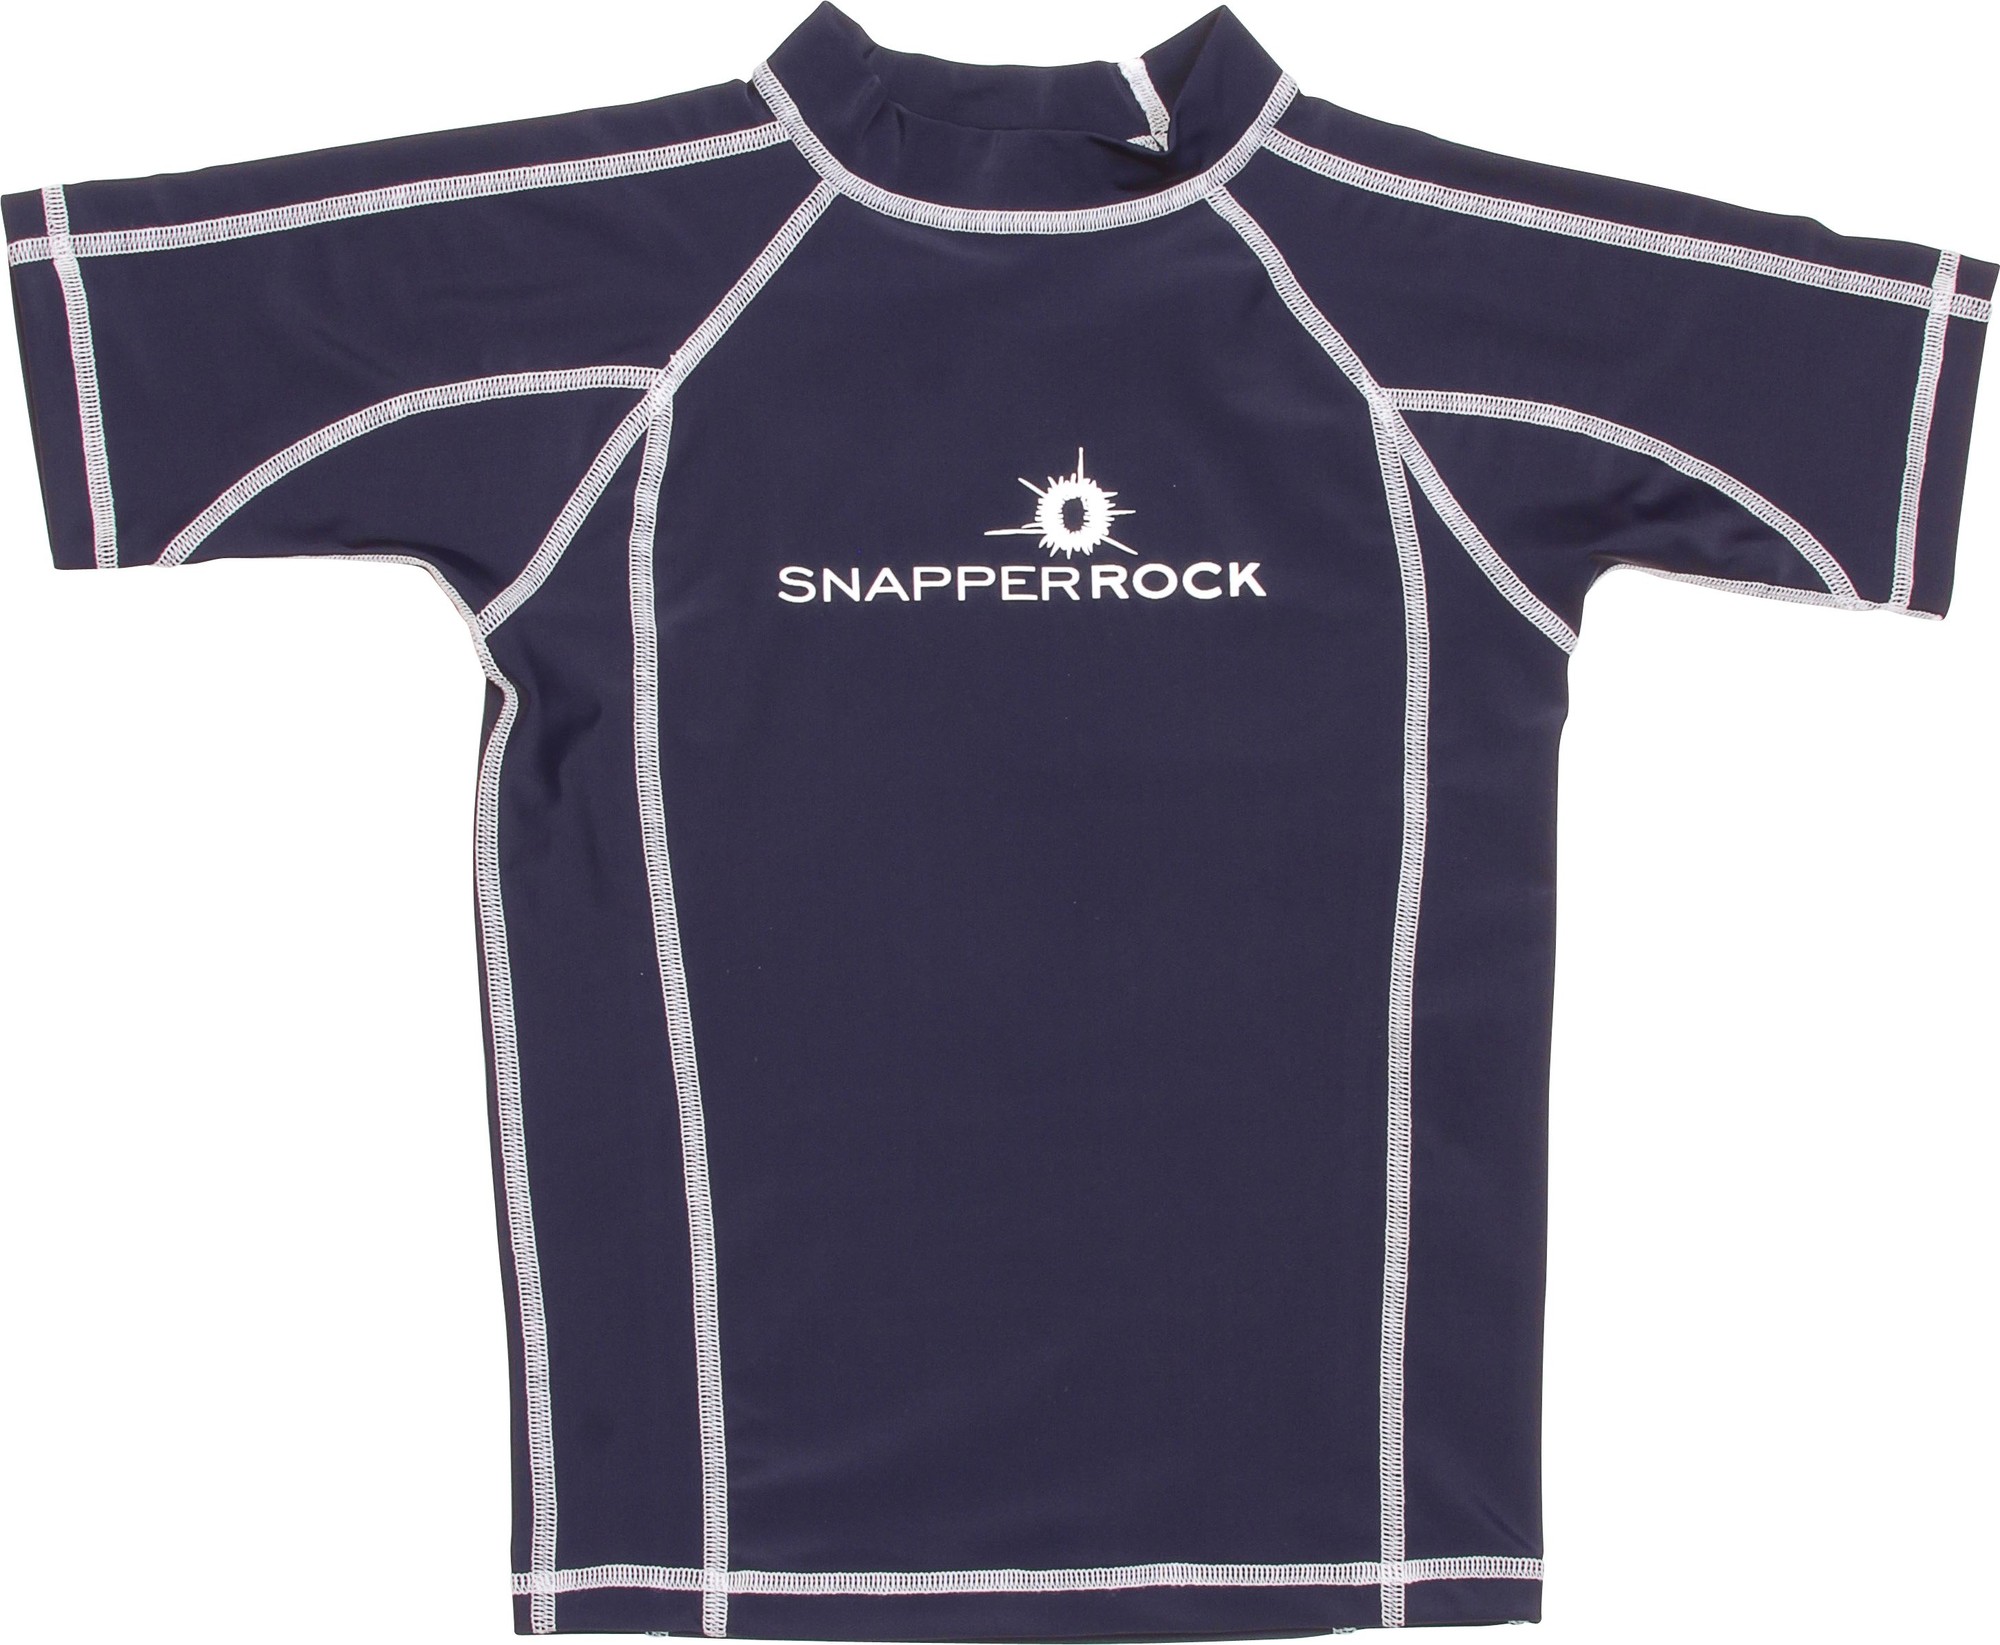 Snapper Rock - Short Sleeve Rash Top - Navy